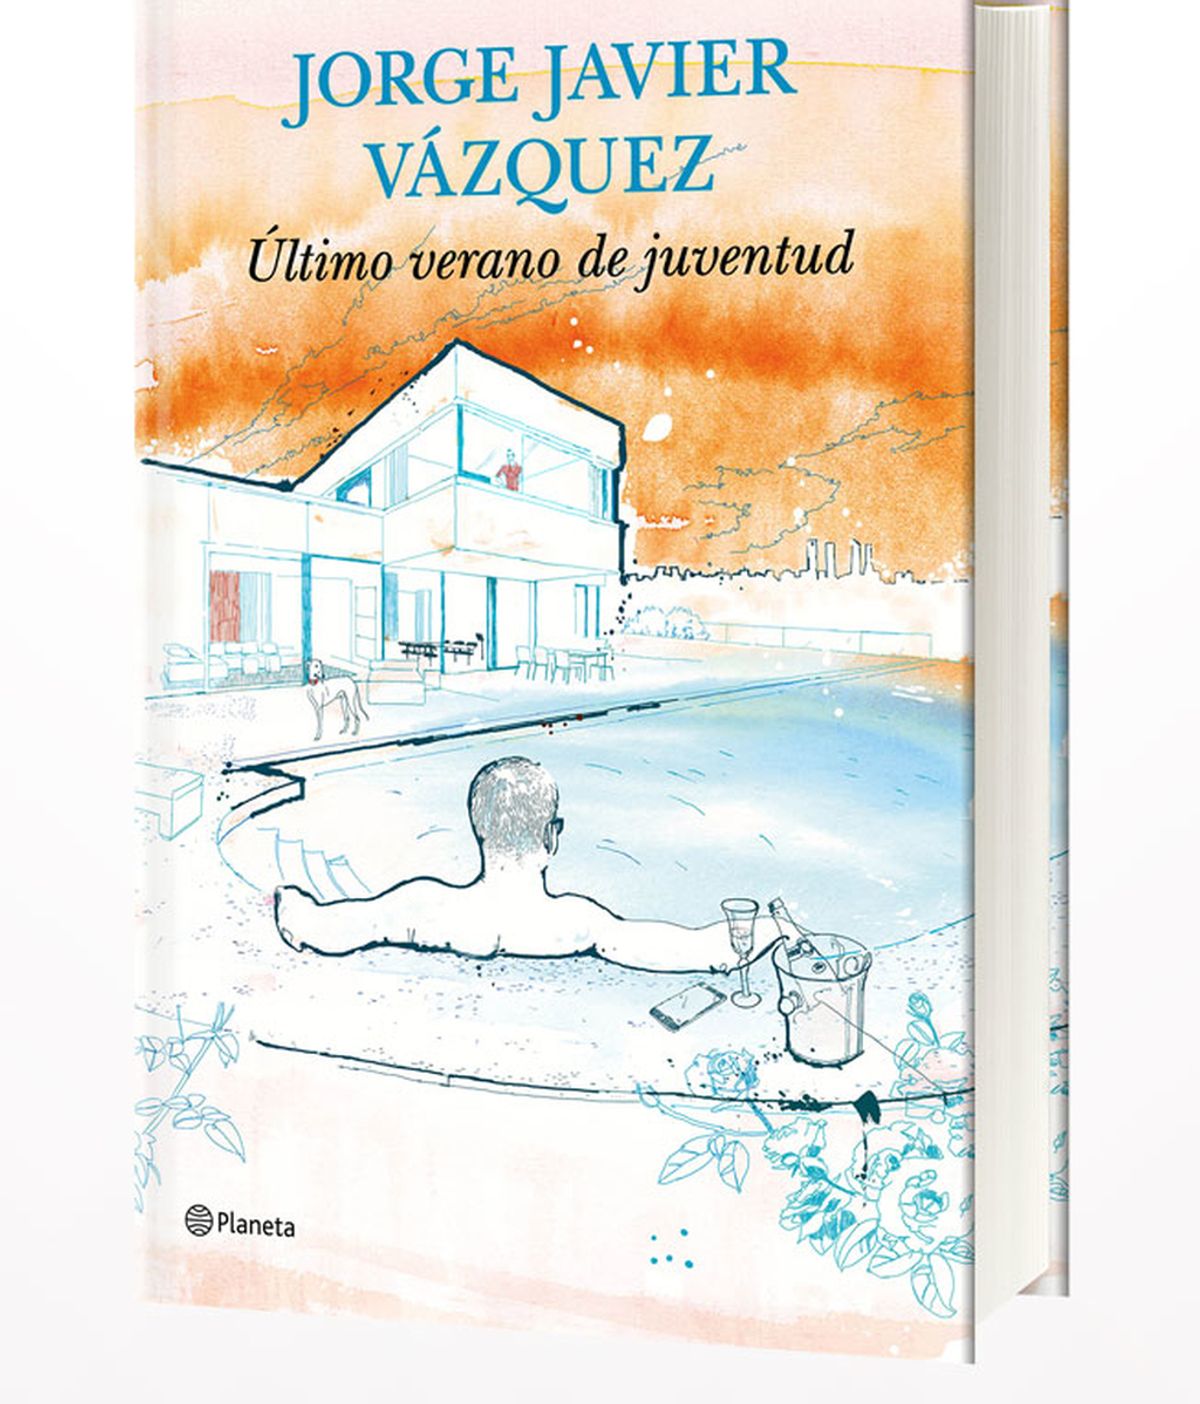 Jorge Javier Vázquez publica su segunda novela 'Último verano de juventud'